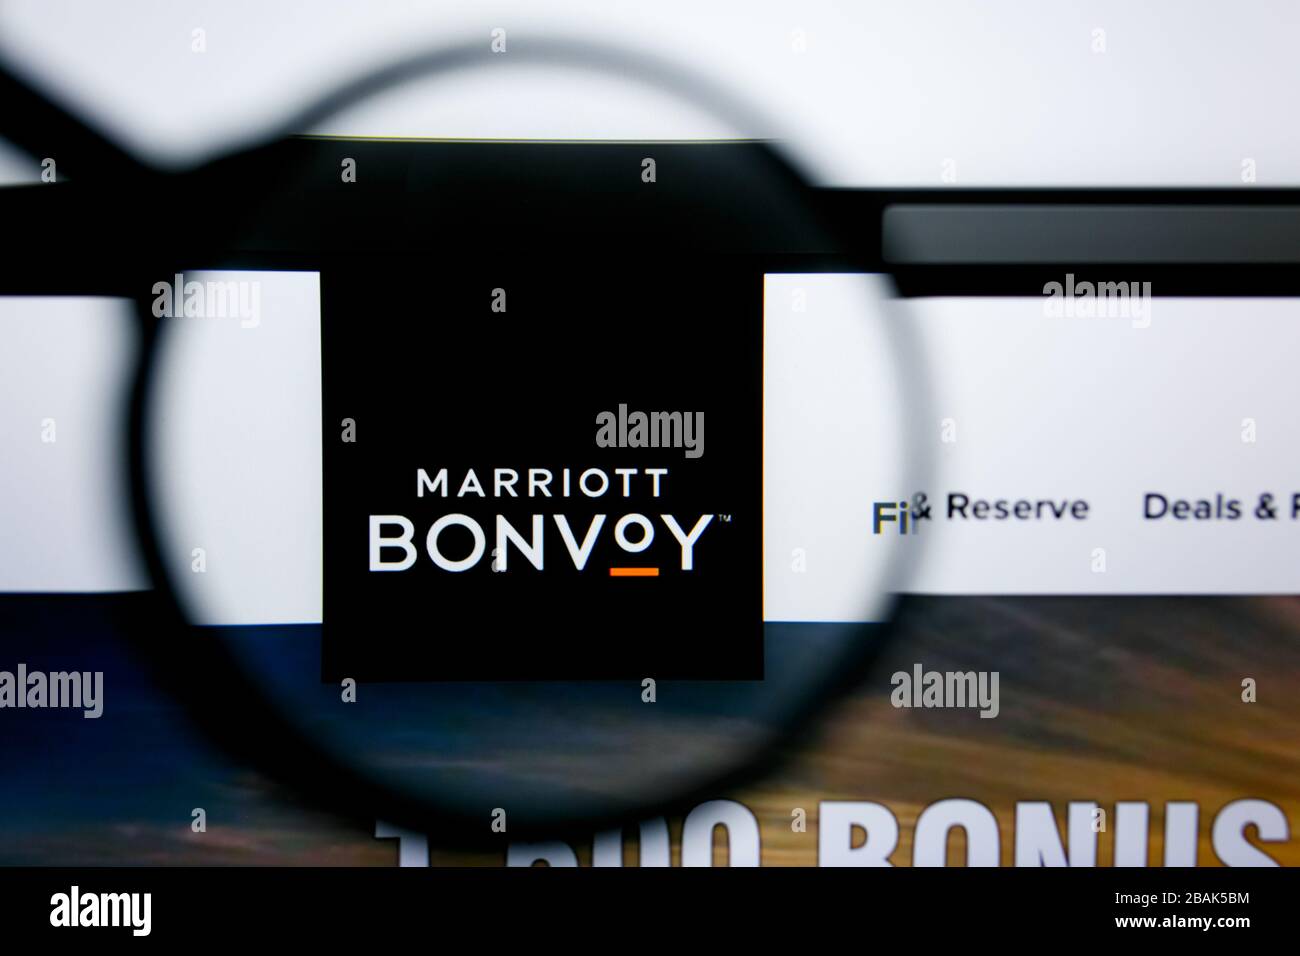 Bonvoy Marriott Stock Photos - Free & Royalty-Free Stock Photos from  Dreamstime